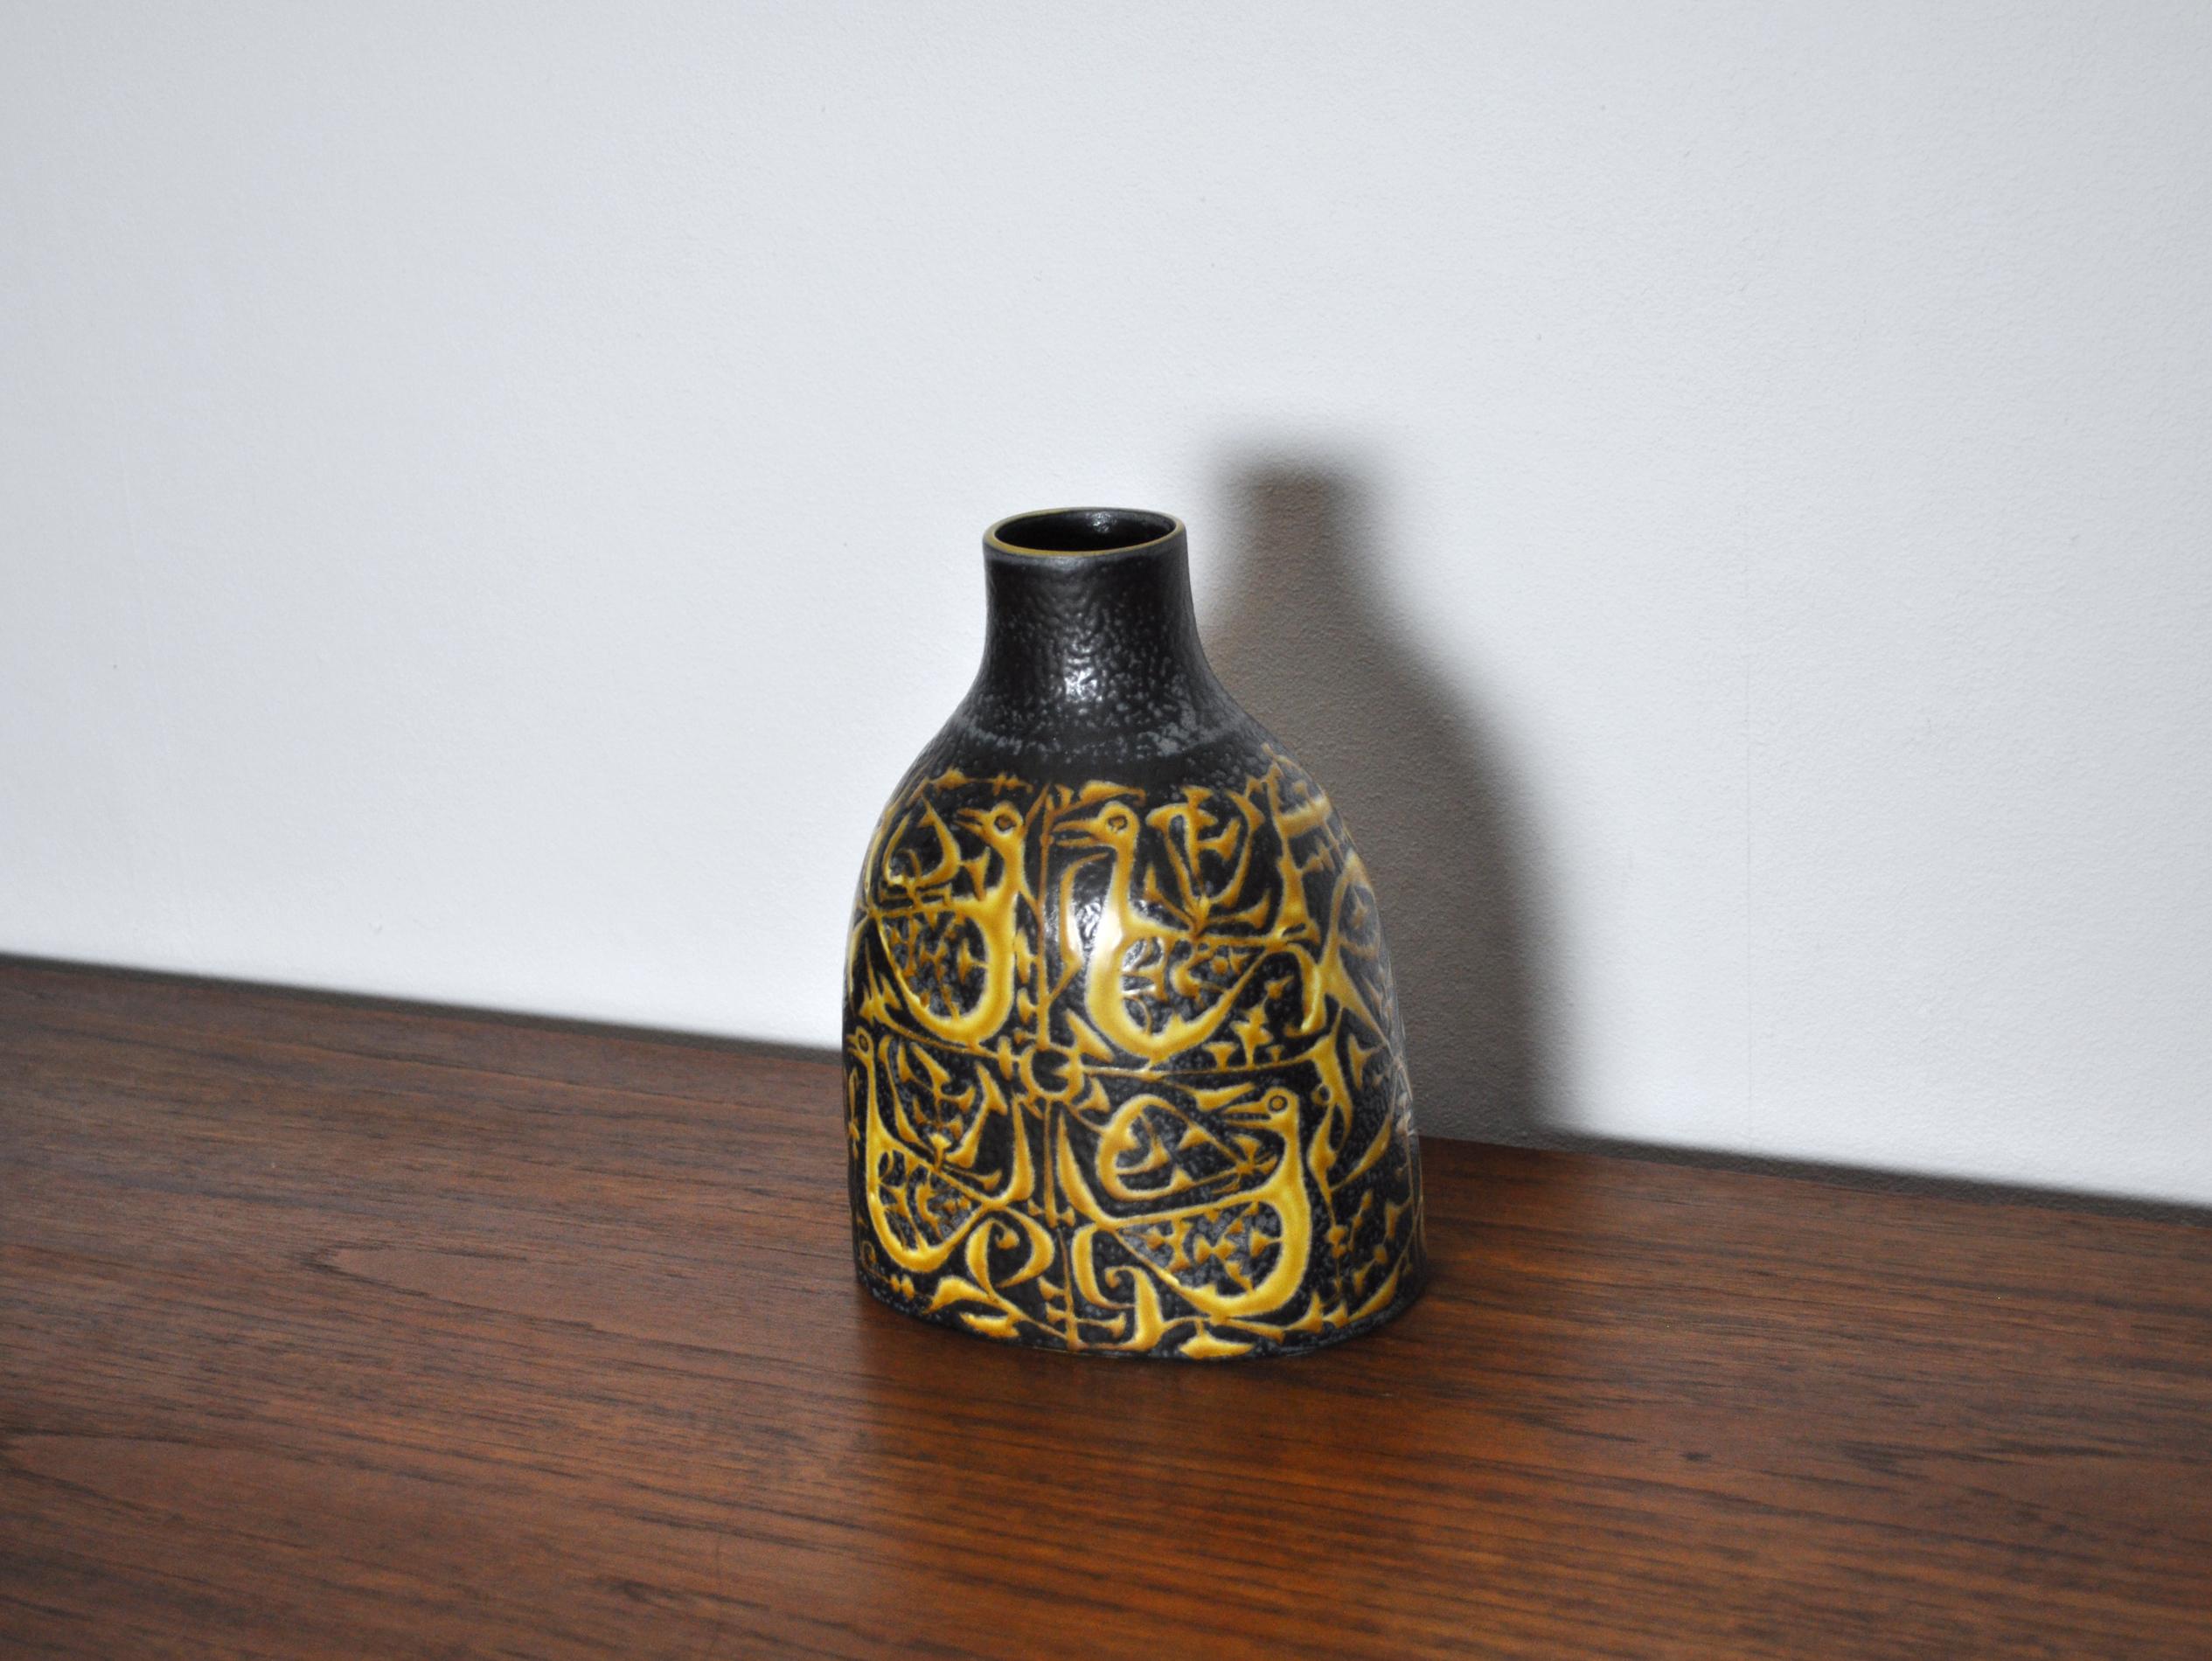 Fajance Vase by Nils Thorsson Baca Royal Copenhagen In Good Condition For Sale In Vordingborg, DK